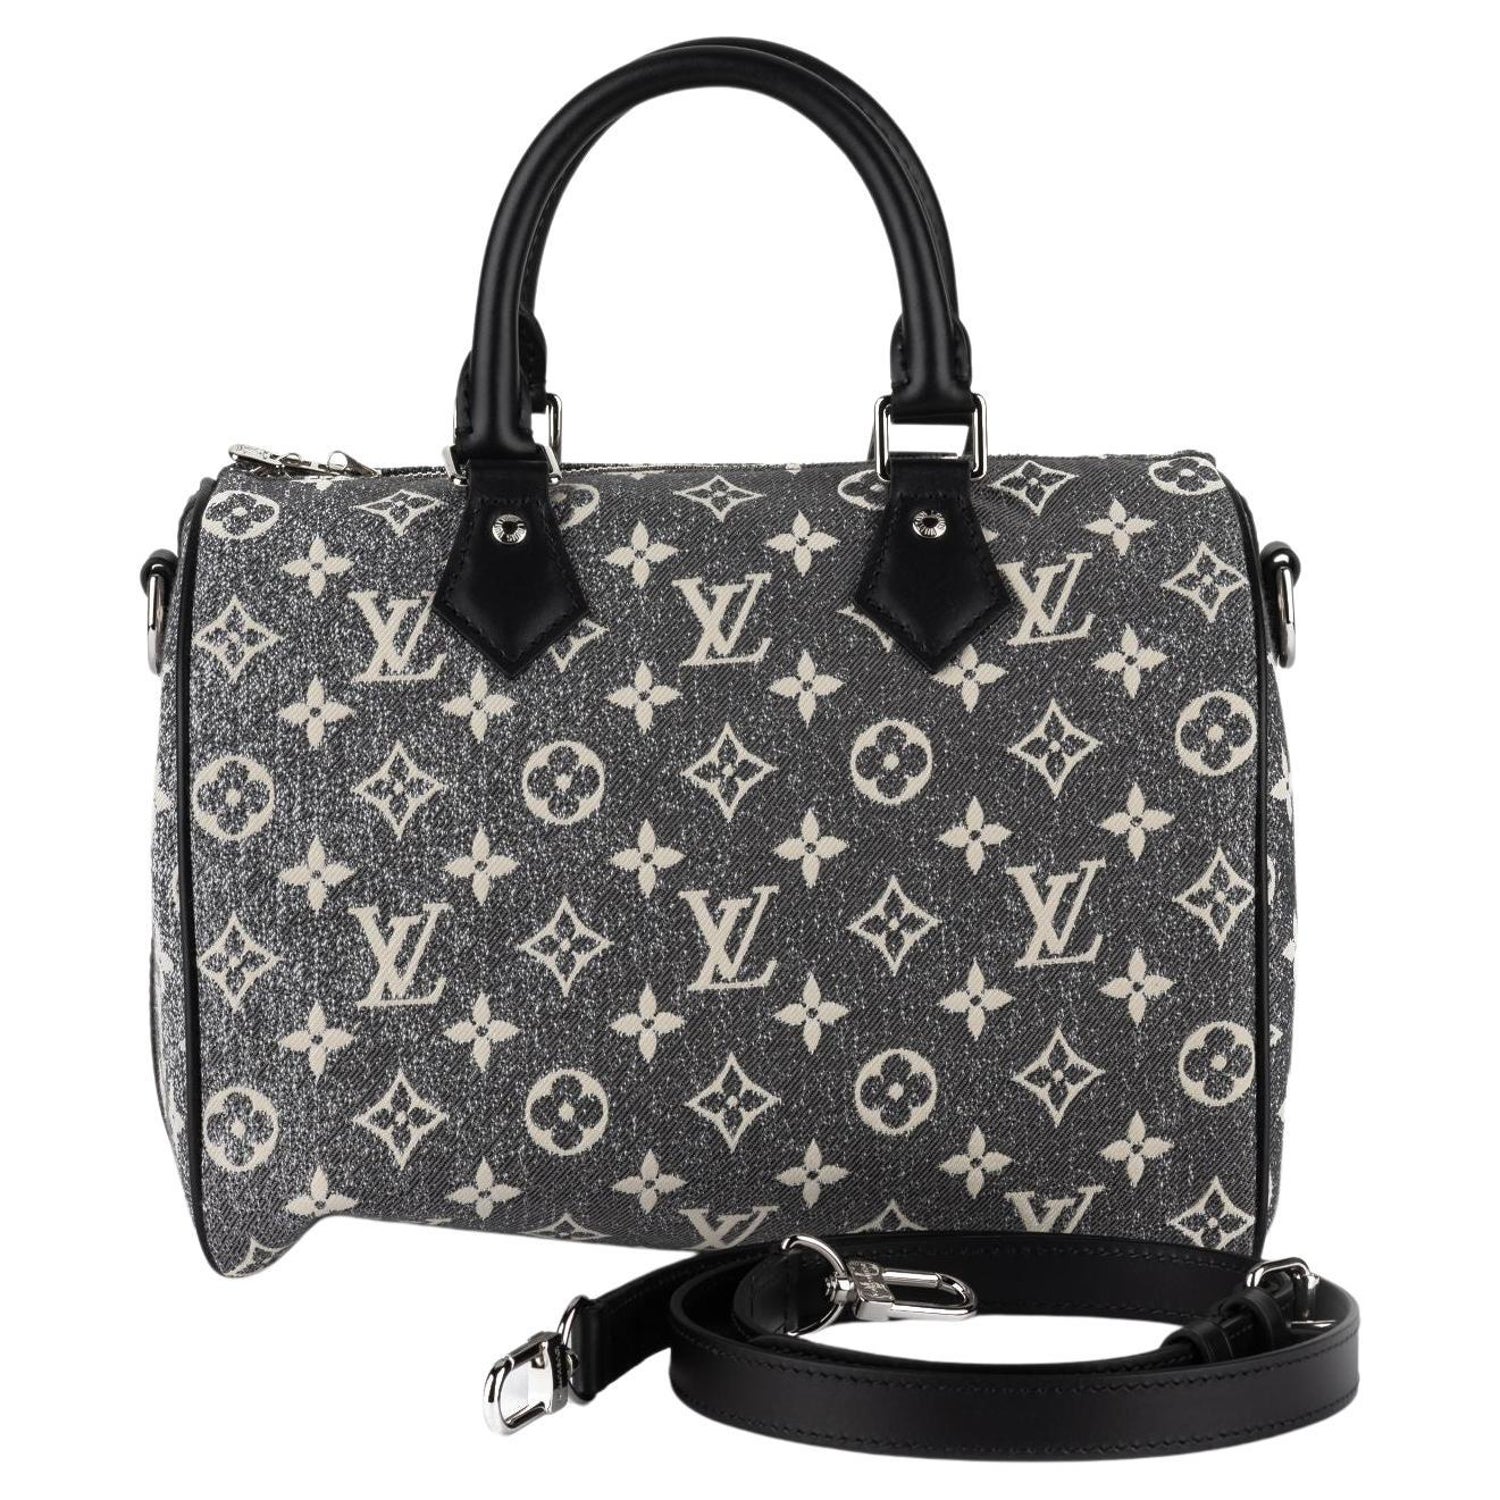 Louis Vuitton Discontinued #1: The Speedy Cube Bag